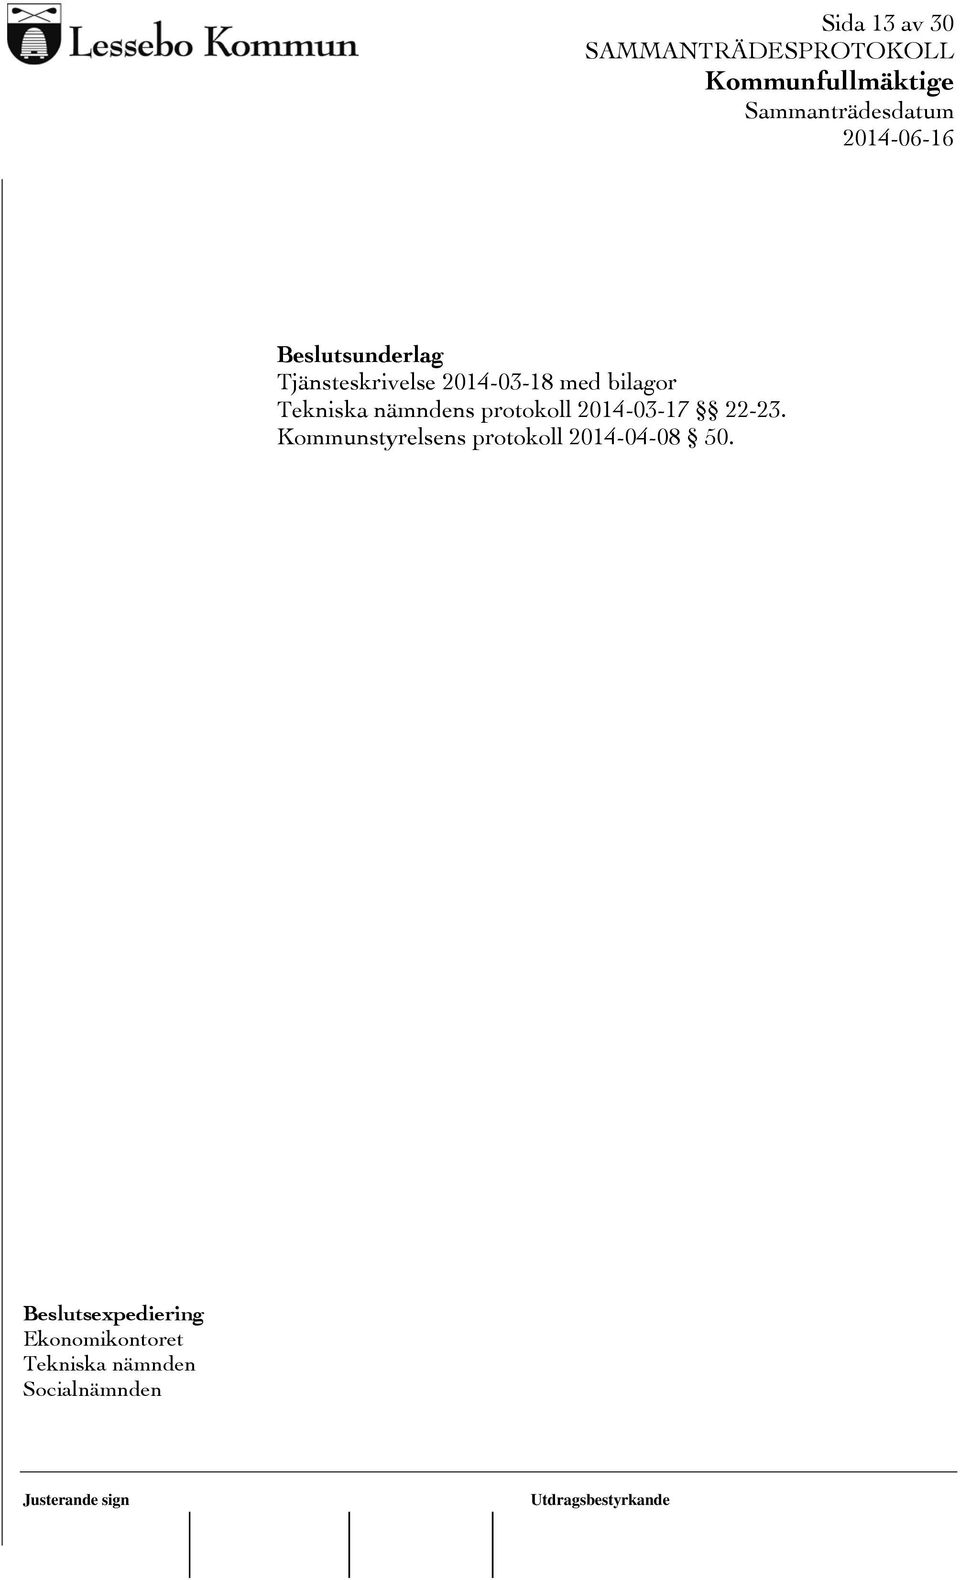 22-23. Kommunstyrelsens protokoll 2014-04-08 50.